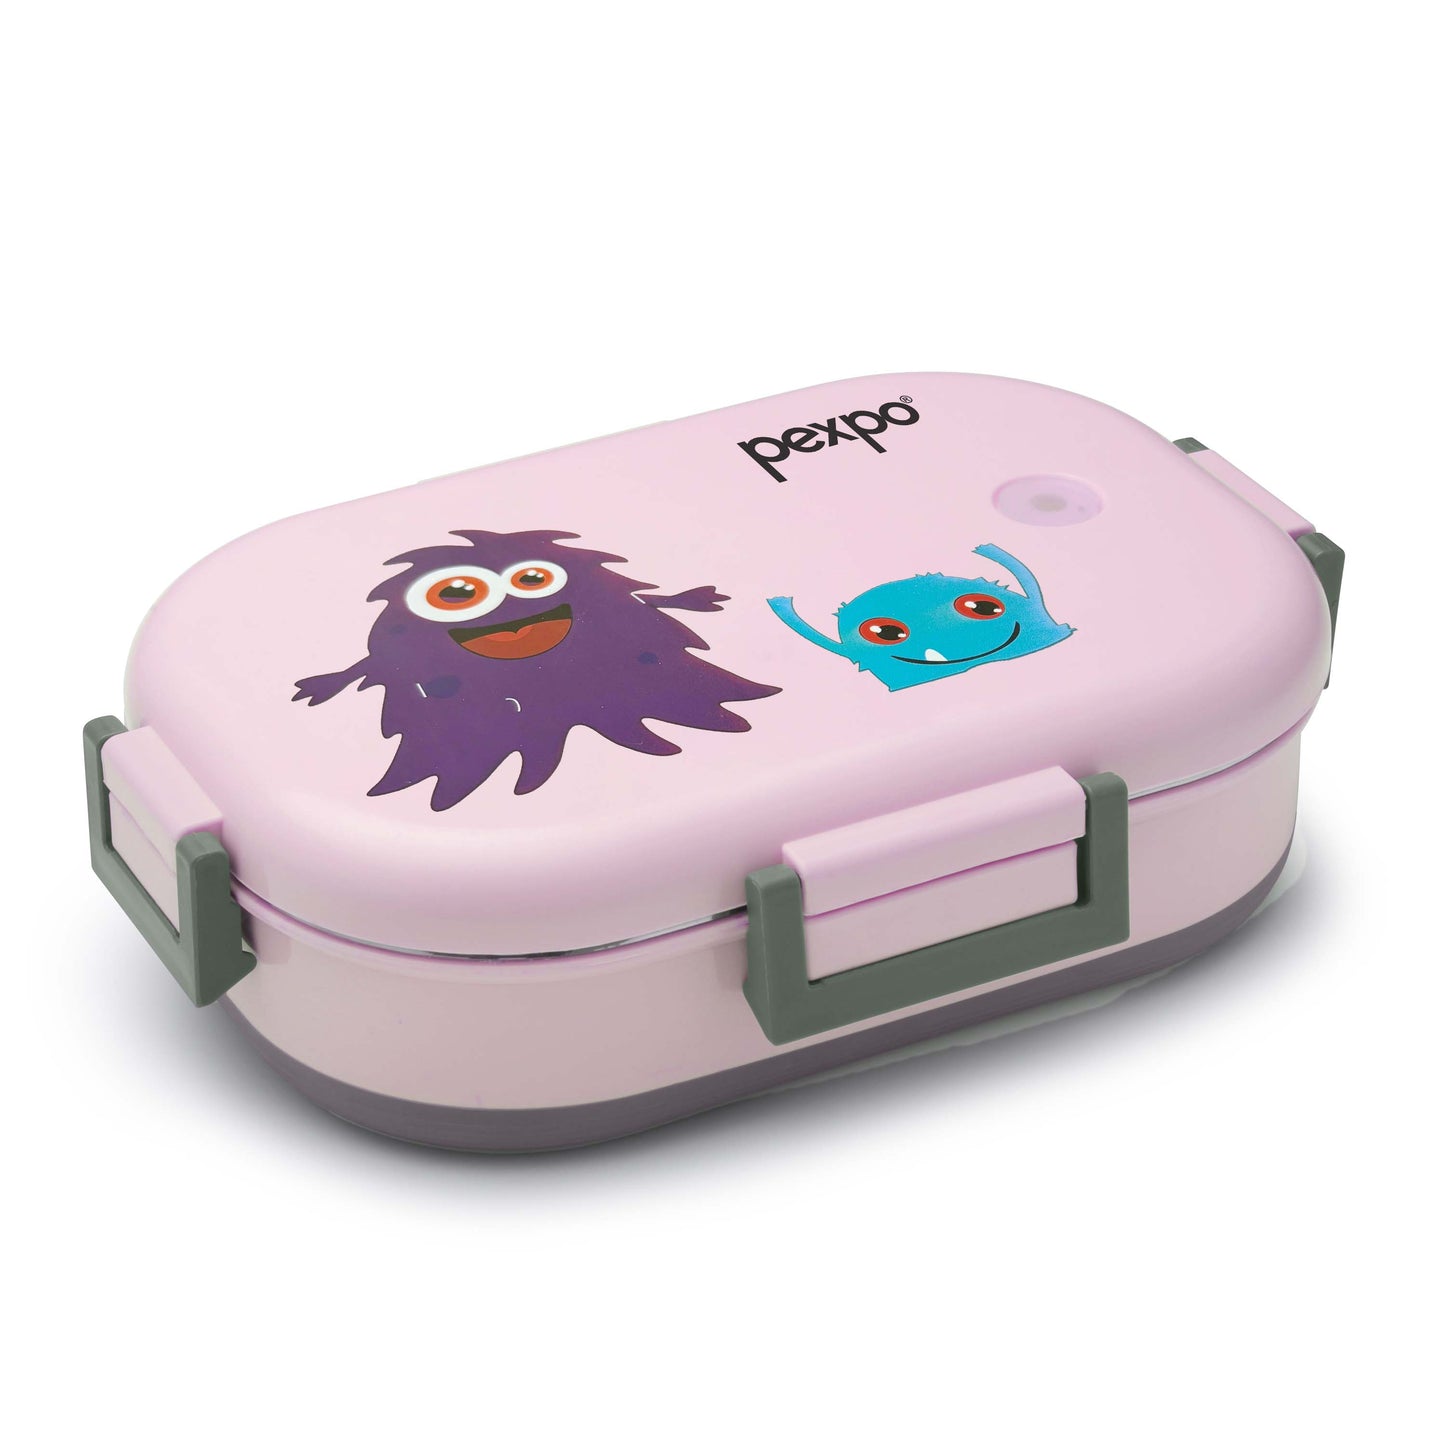 Pexpo Tango  - Stainless Steel Kids Lunch Box (Purple Monster Design)